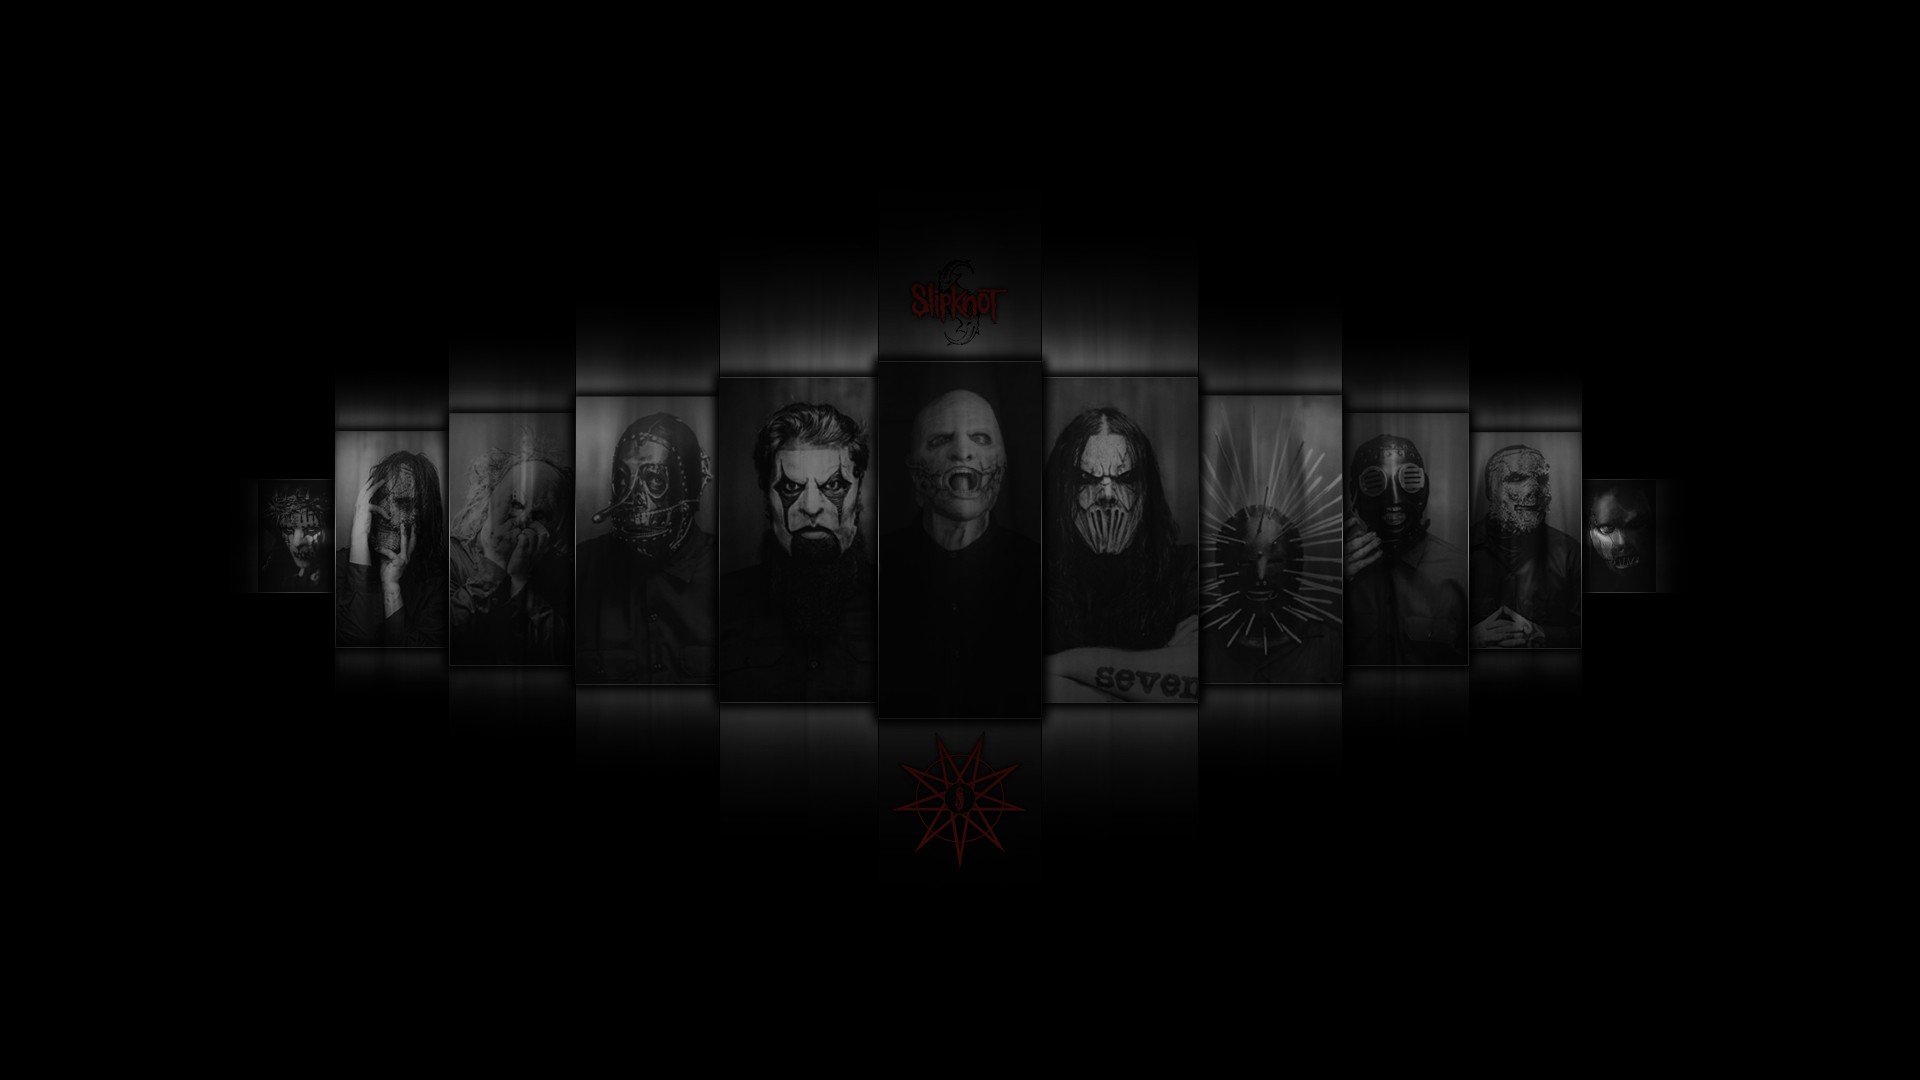 Metal Metal Music Slipknot Hd Wallpapers Desktop And Mobile Images Photos